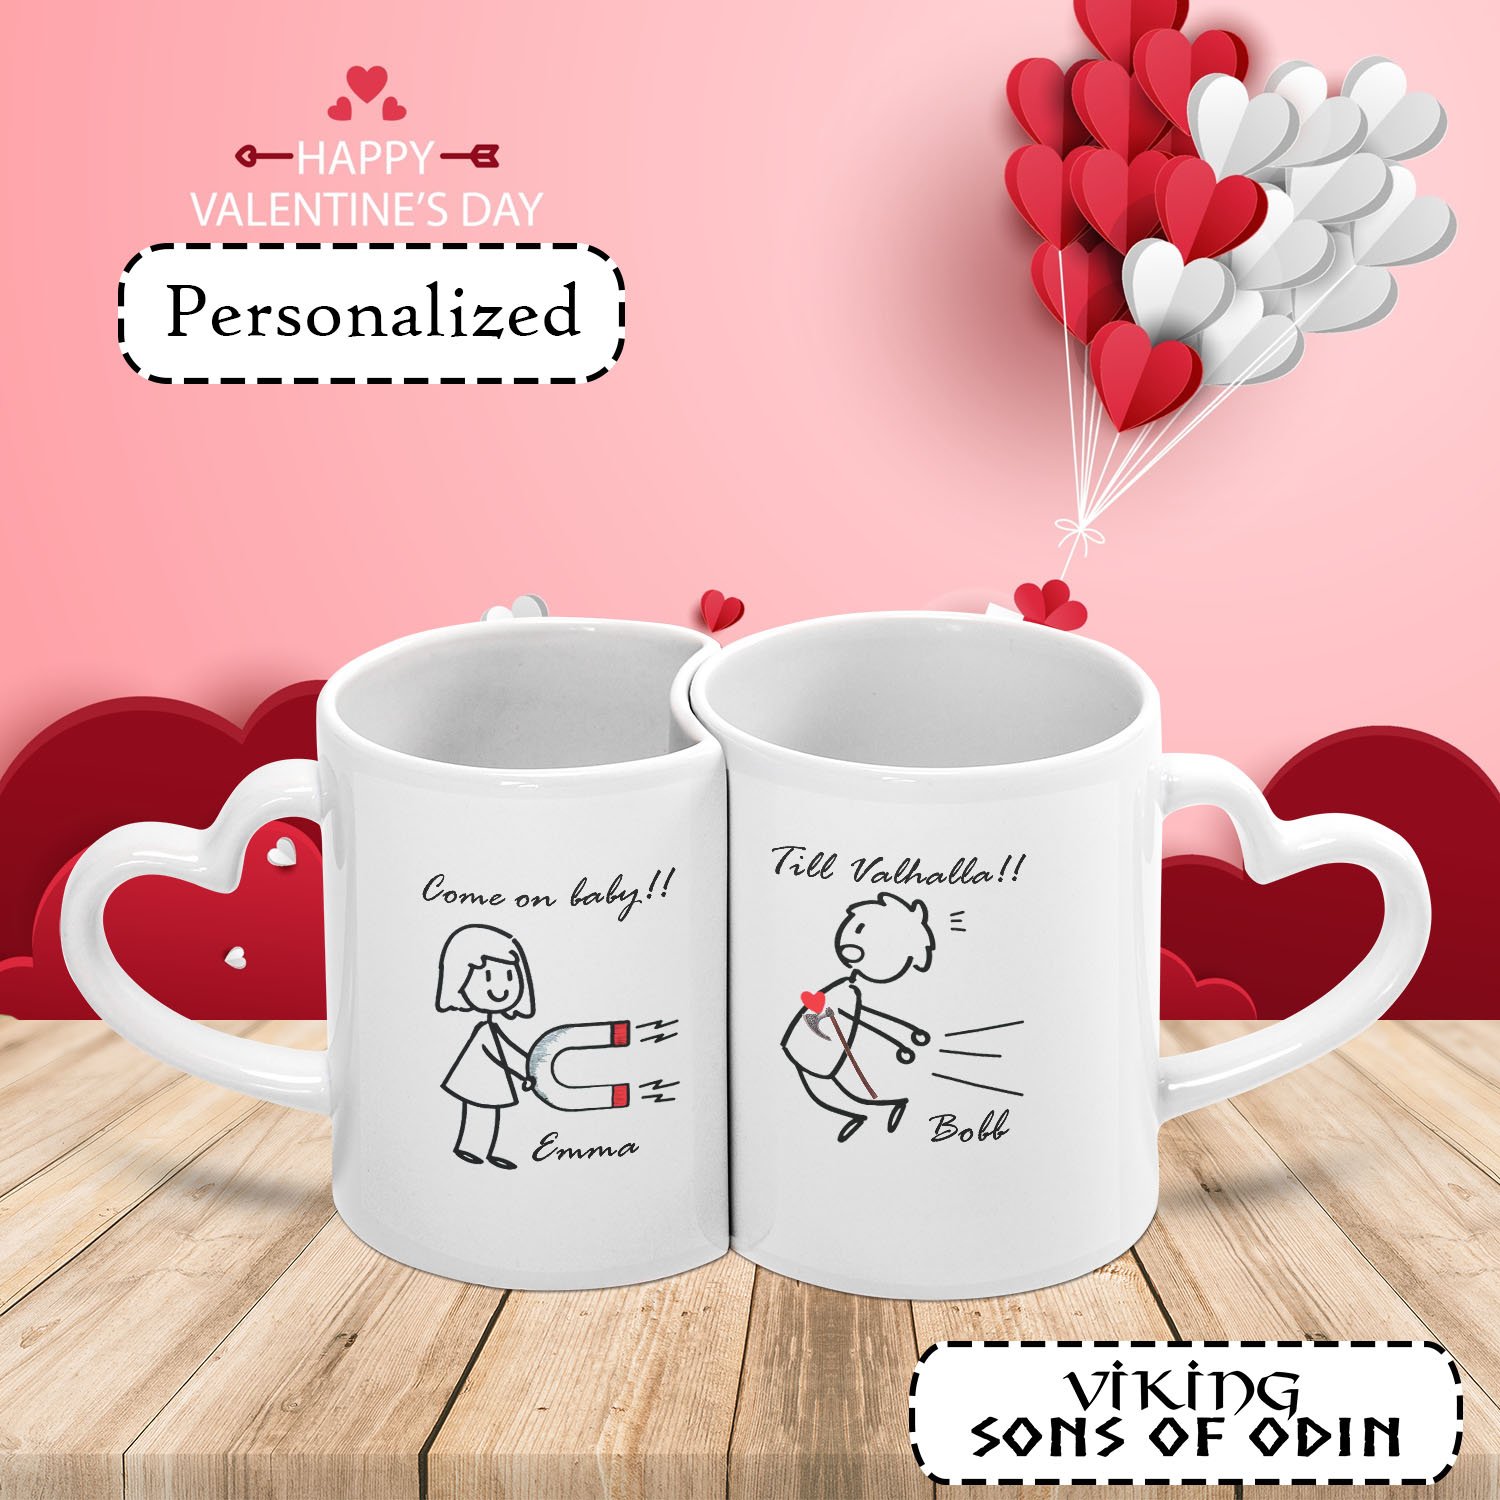 https://vikingsonsofodin.com/wp-content/uploads/2022/12/Viking-Mug-Heart-Gifts-For-Valentine-Viking-Valentine-Couple-Matching-Mug-Set.jpg